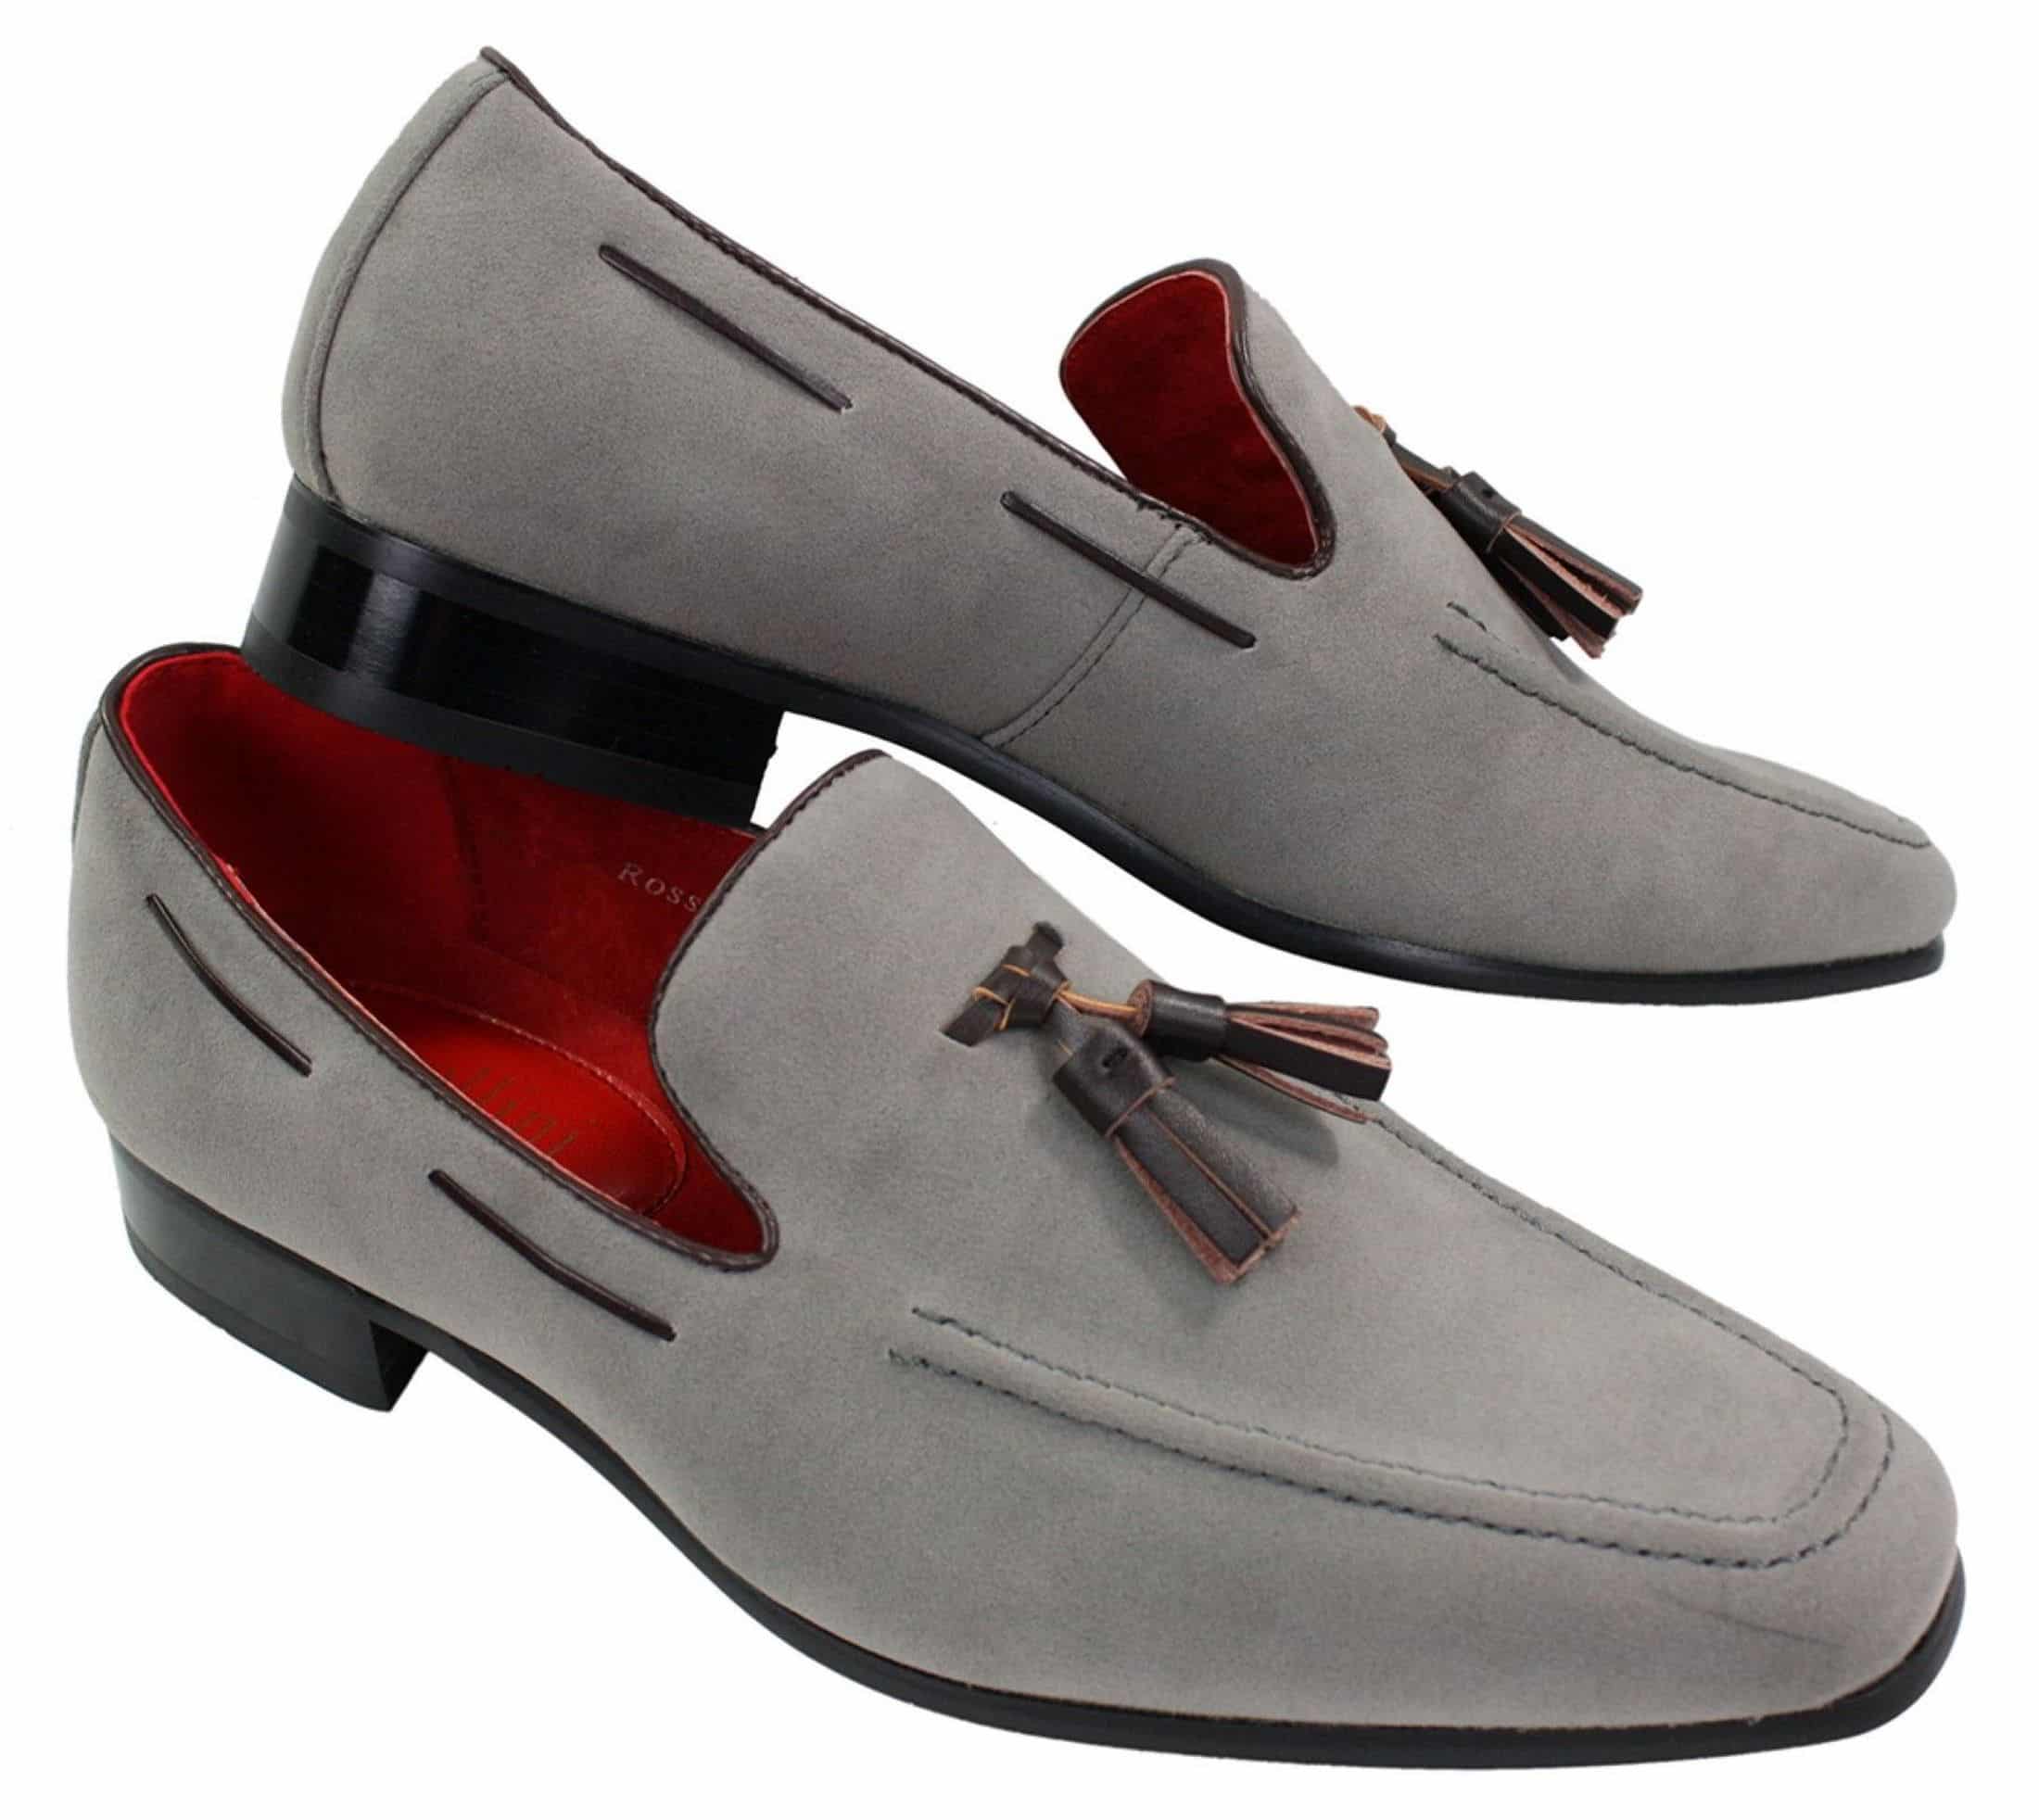 Mens Suede Loafers Driving Shoes Slip On Tassle Design Leather Smart ...